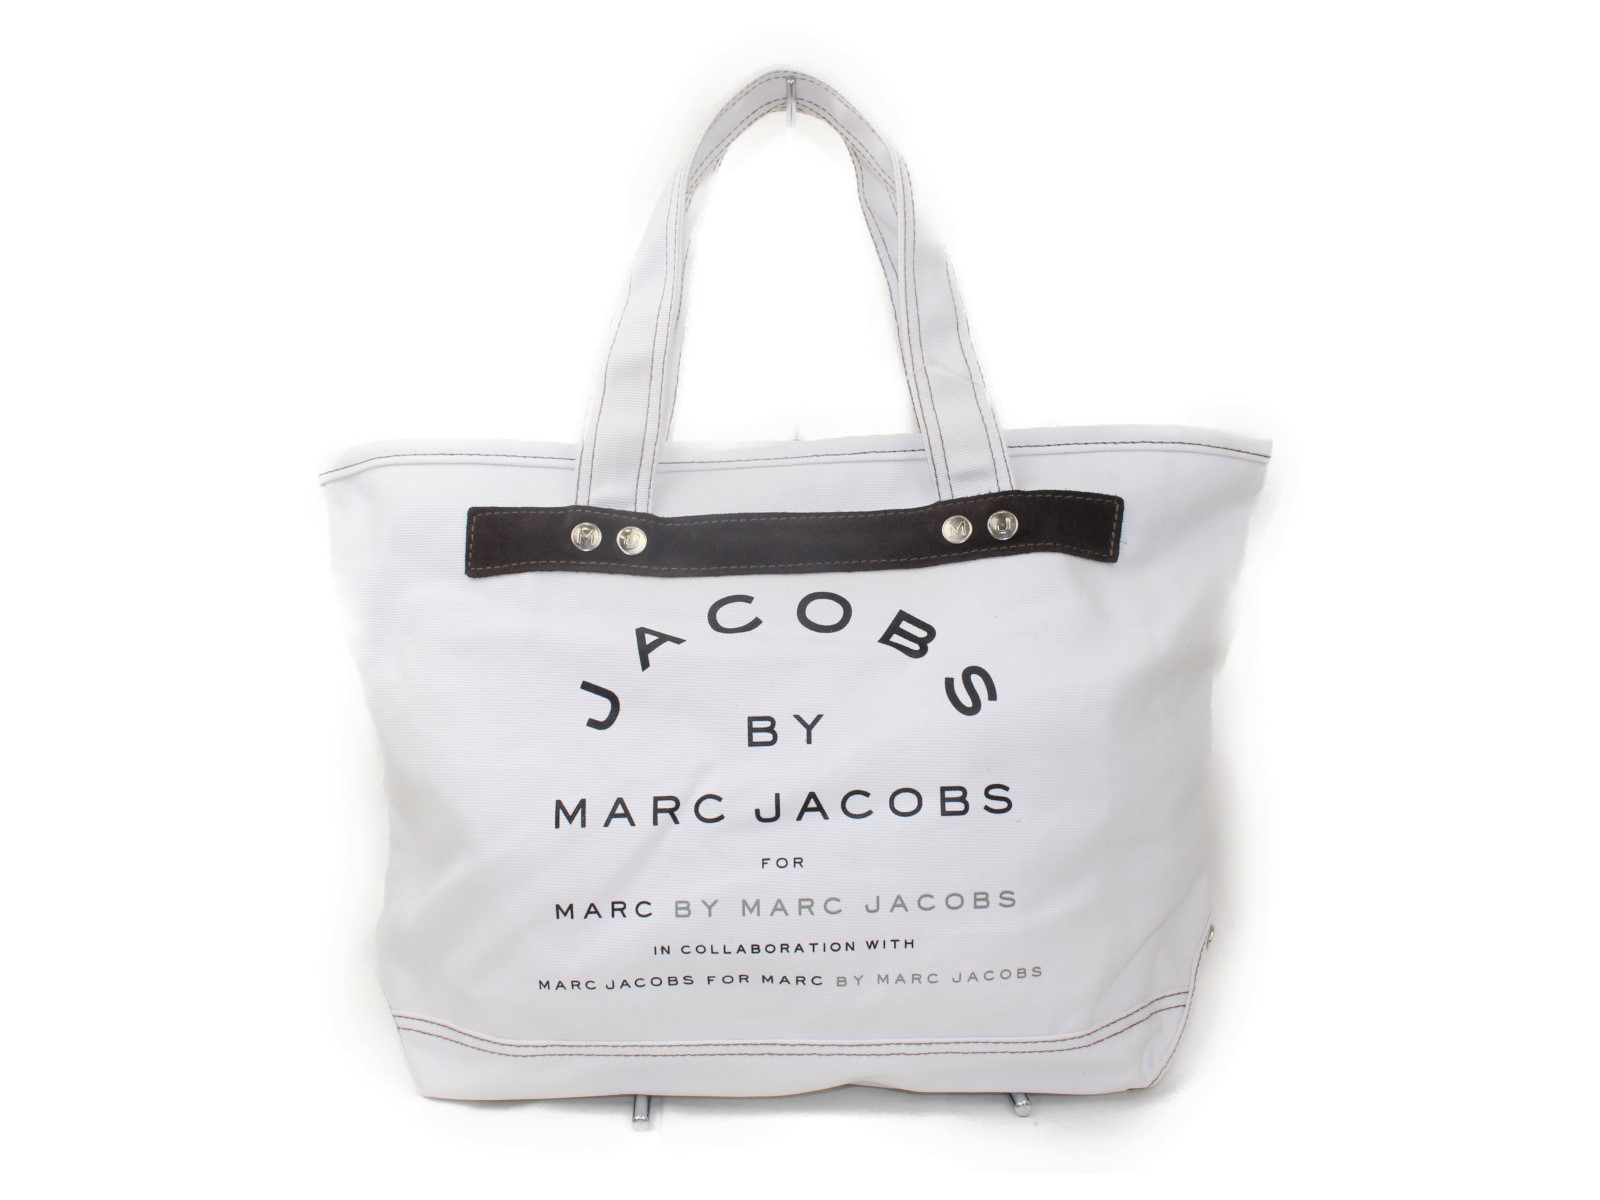 Marc By Marc Jacobs マークバイマークジェイコブス ホワイト ポリウレタン レディース ユニセックス ブランド かわいい 軽い ハンドバッグ シンプル マザーズバッグ 中古 トートバッグ トートバッグ